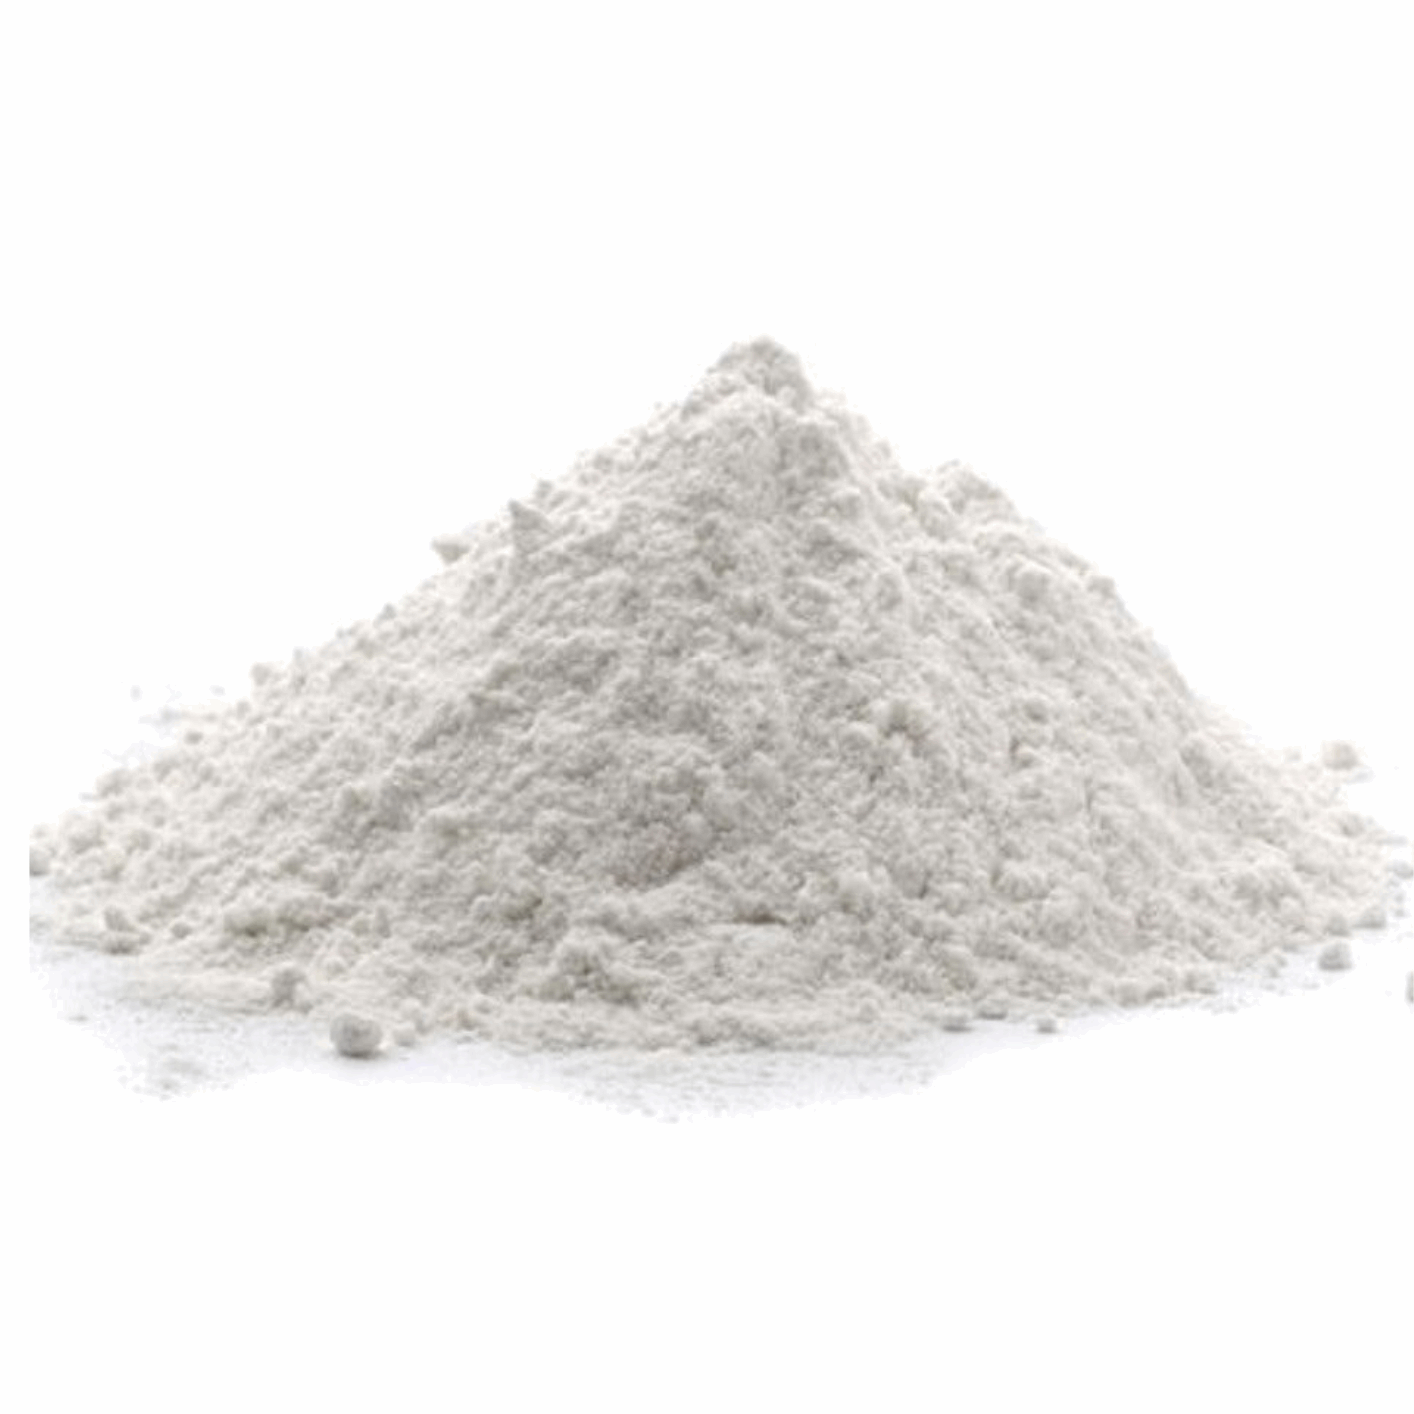 Patco Pharma Magnesium Stearate Powder, Patco Pharma, API Powders, patco-pharma-magnesium-stearate-powder, Magnesium Stearate, Patco Pharma